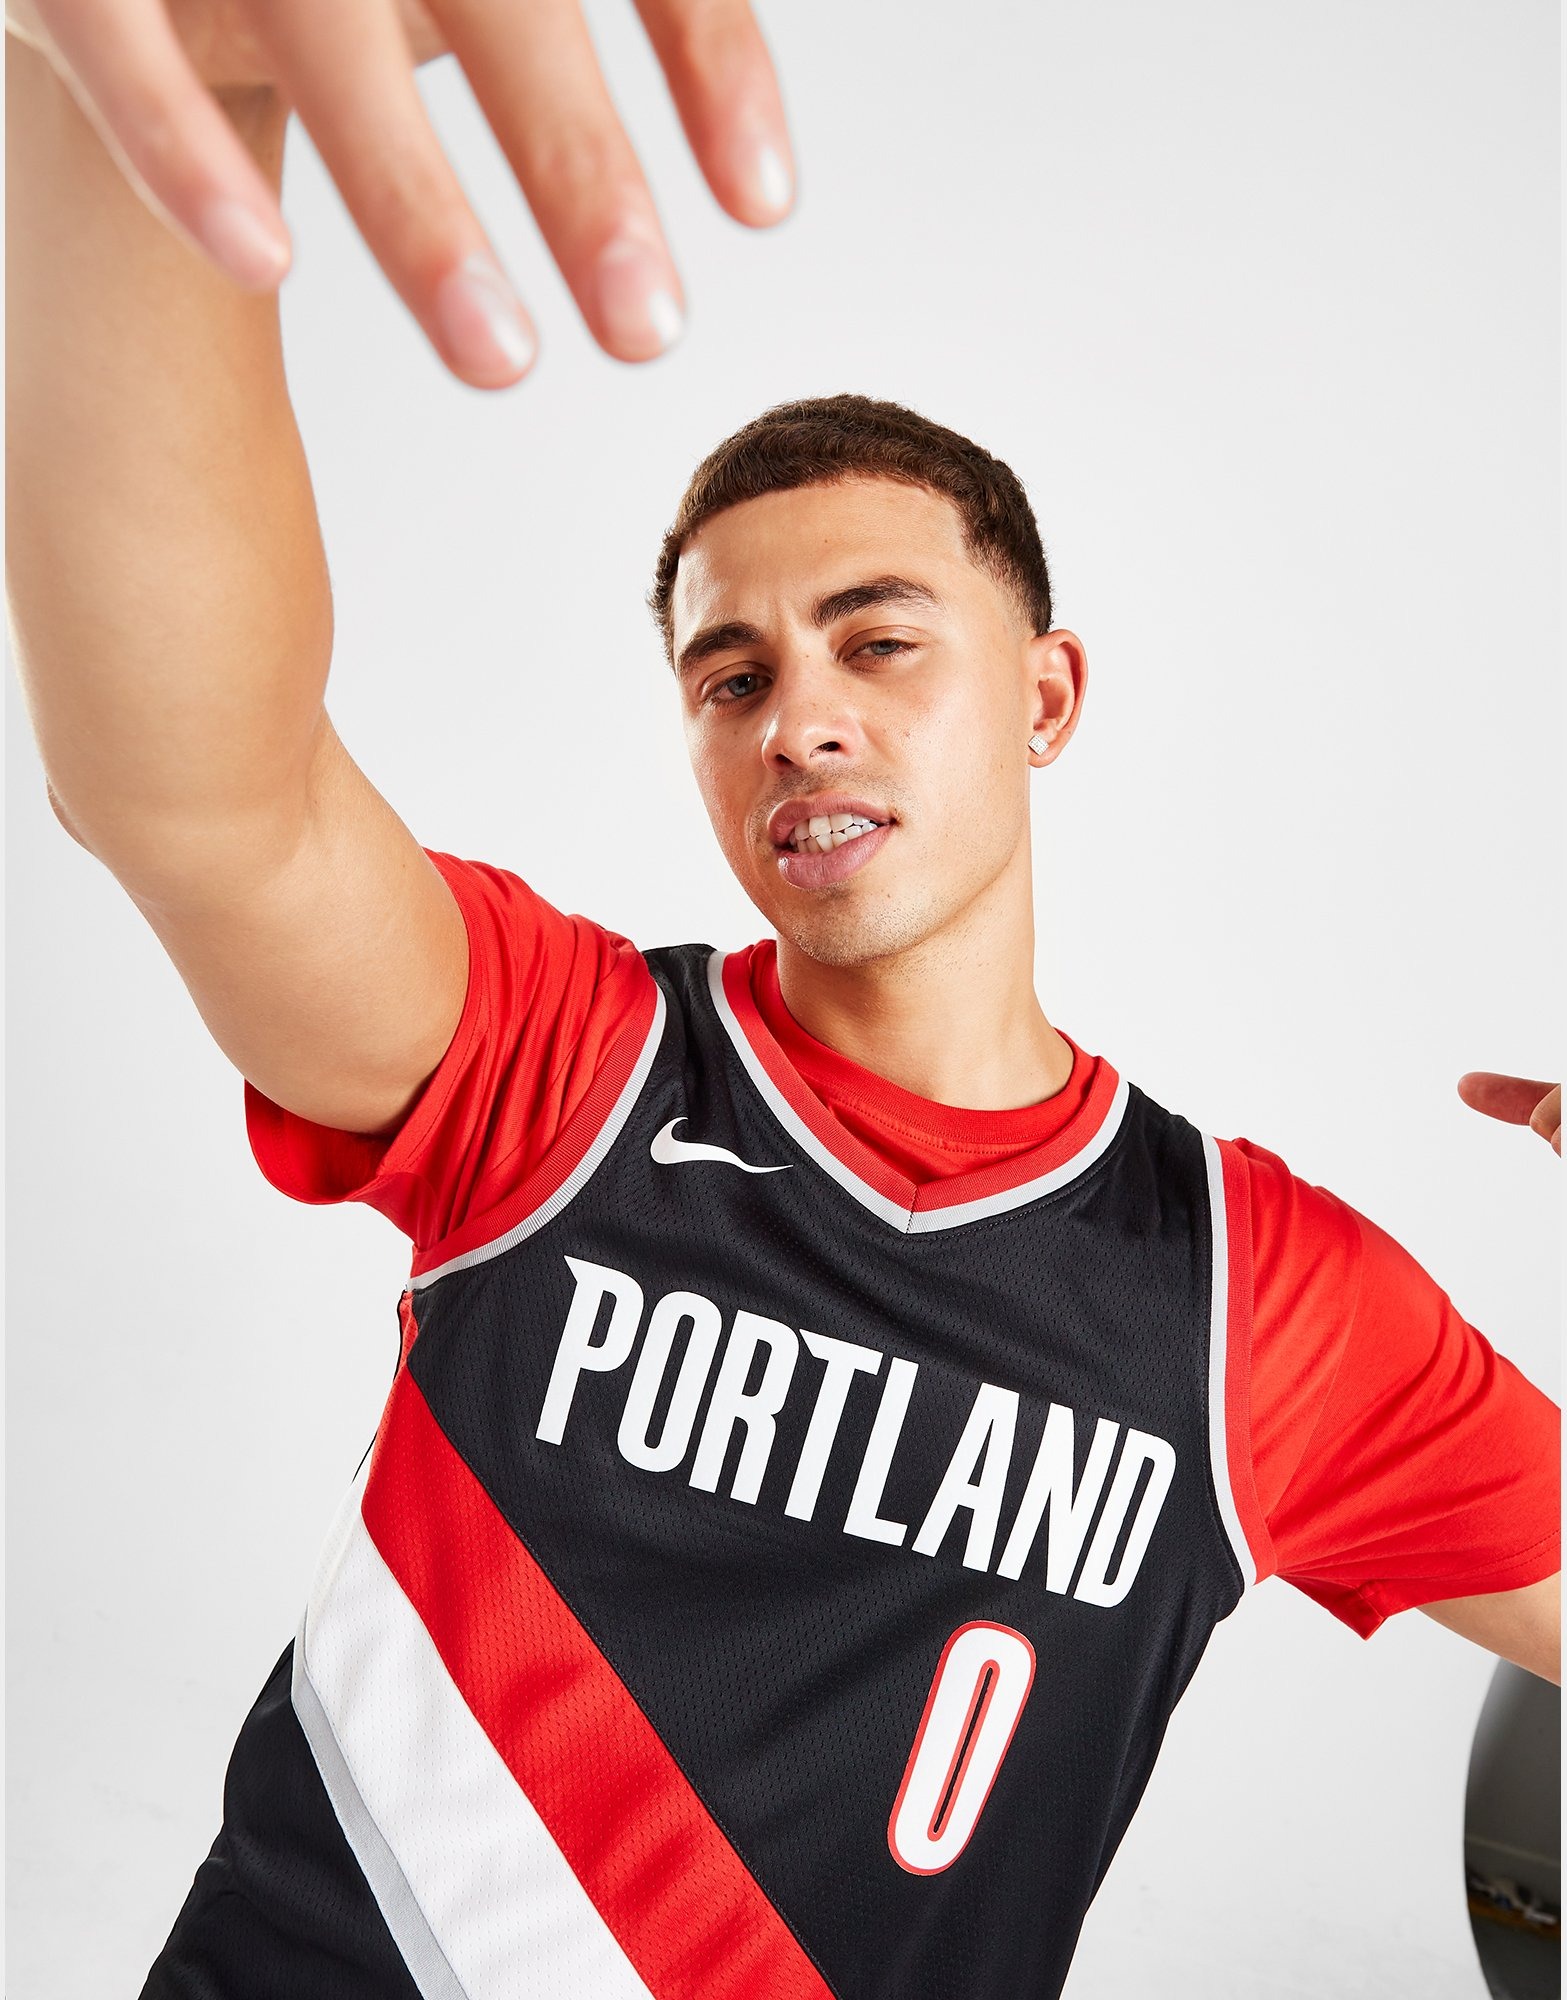 NBA Portland Trail Blazers Damian Lillard #0 Men’s Replica Jersey, Small,  White